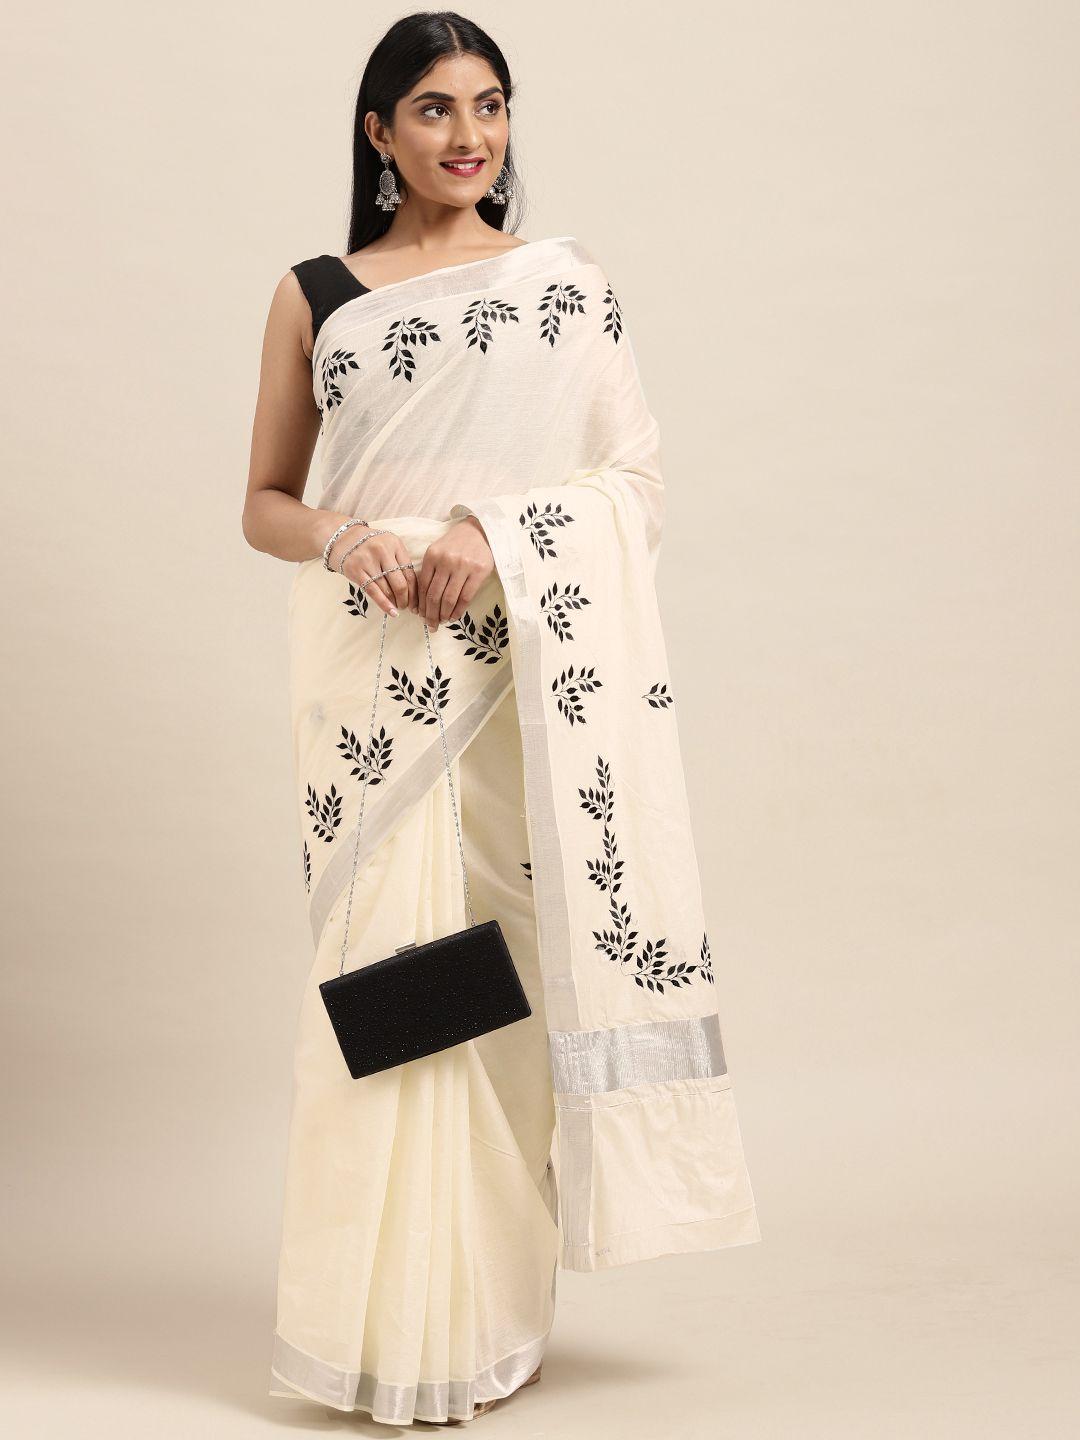 thara sarees off white & black ethnic motifs embroidered pure cotton kasavu saree